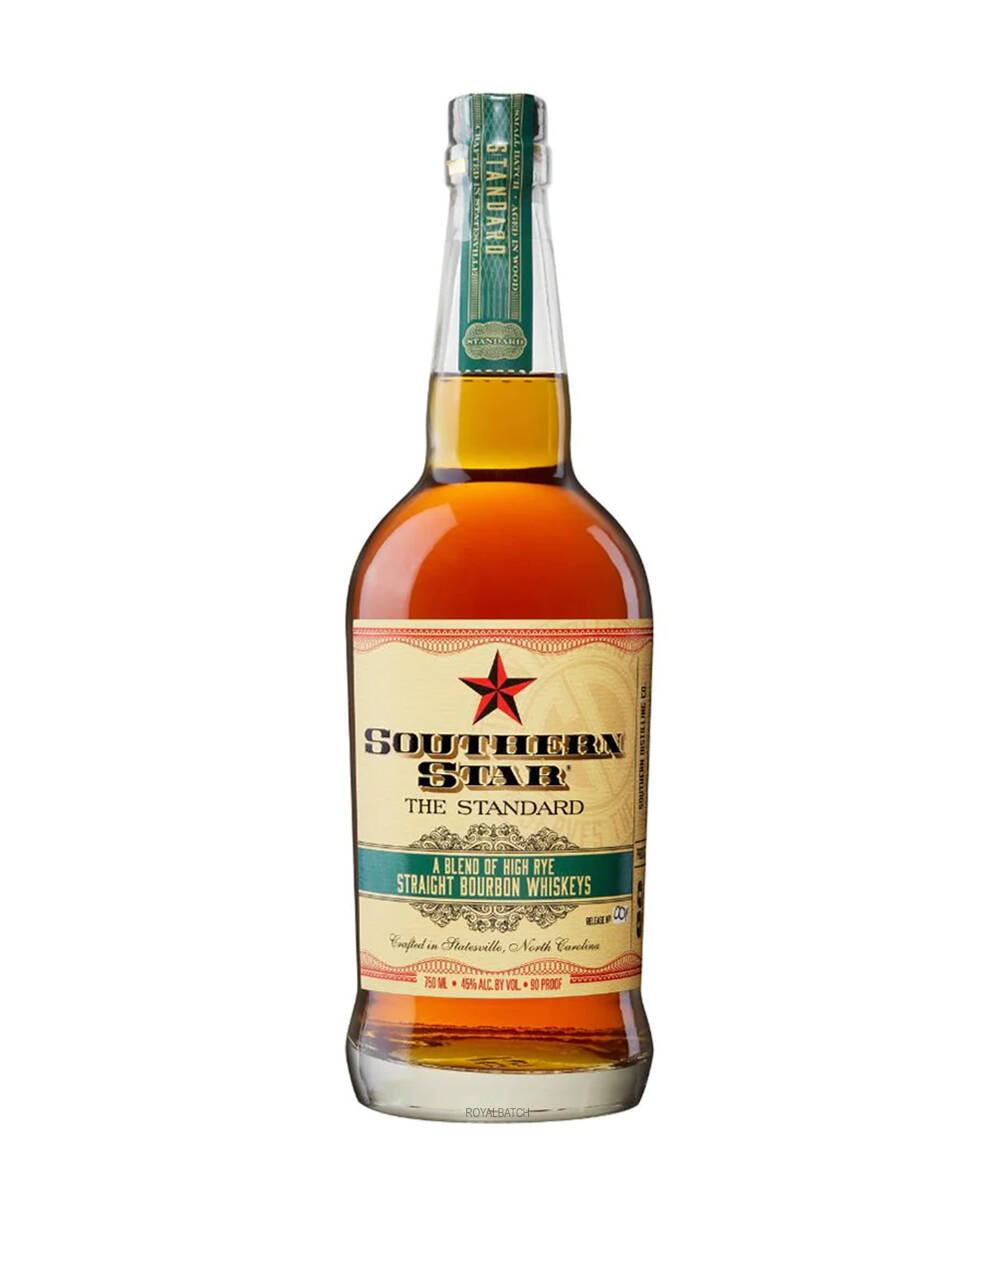 Southern Star Standard High Rye Straight Bourbon Whiskey